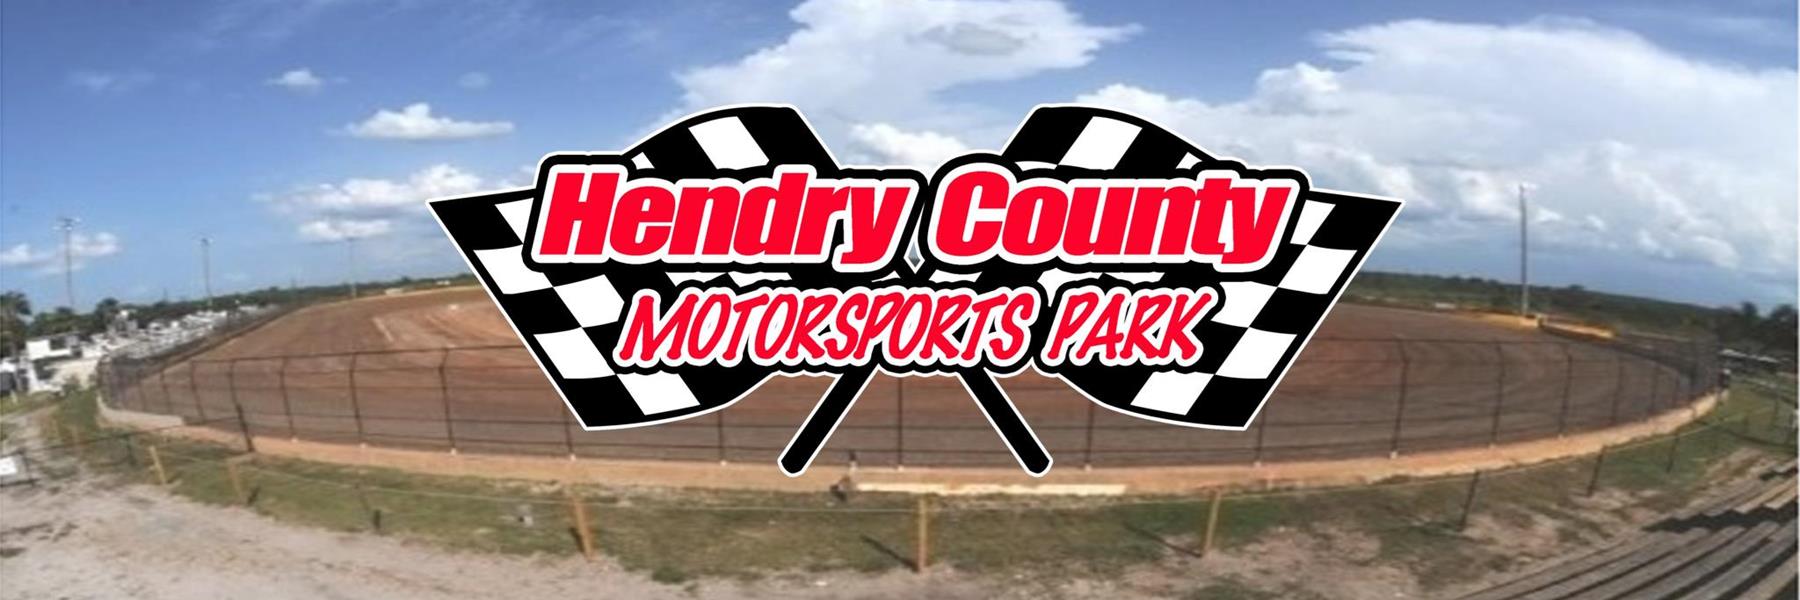 2/3/2023 - Hendry County Motorsports Park